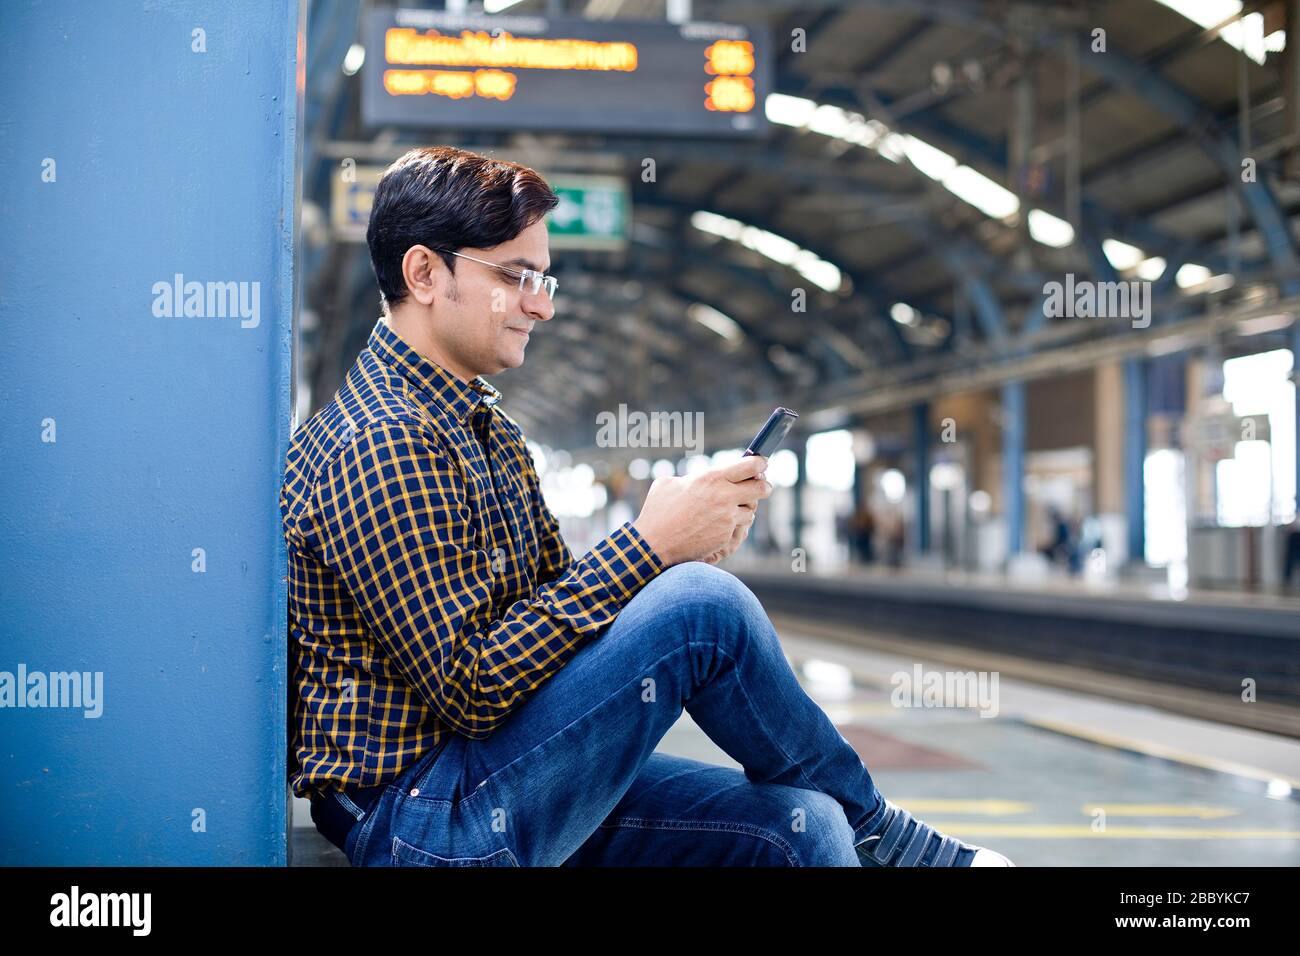 Man using mobile phone at railroad station platform Stock Photo